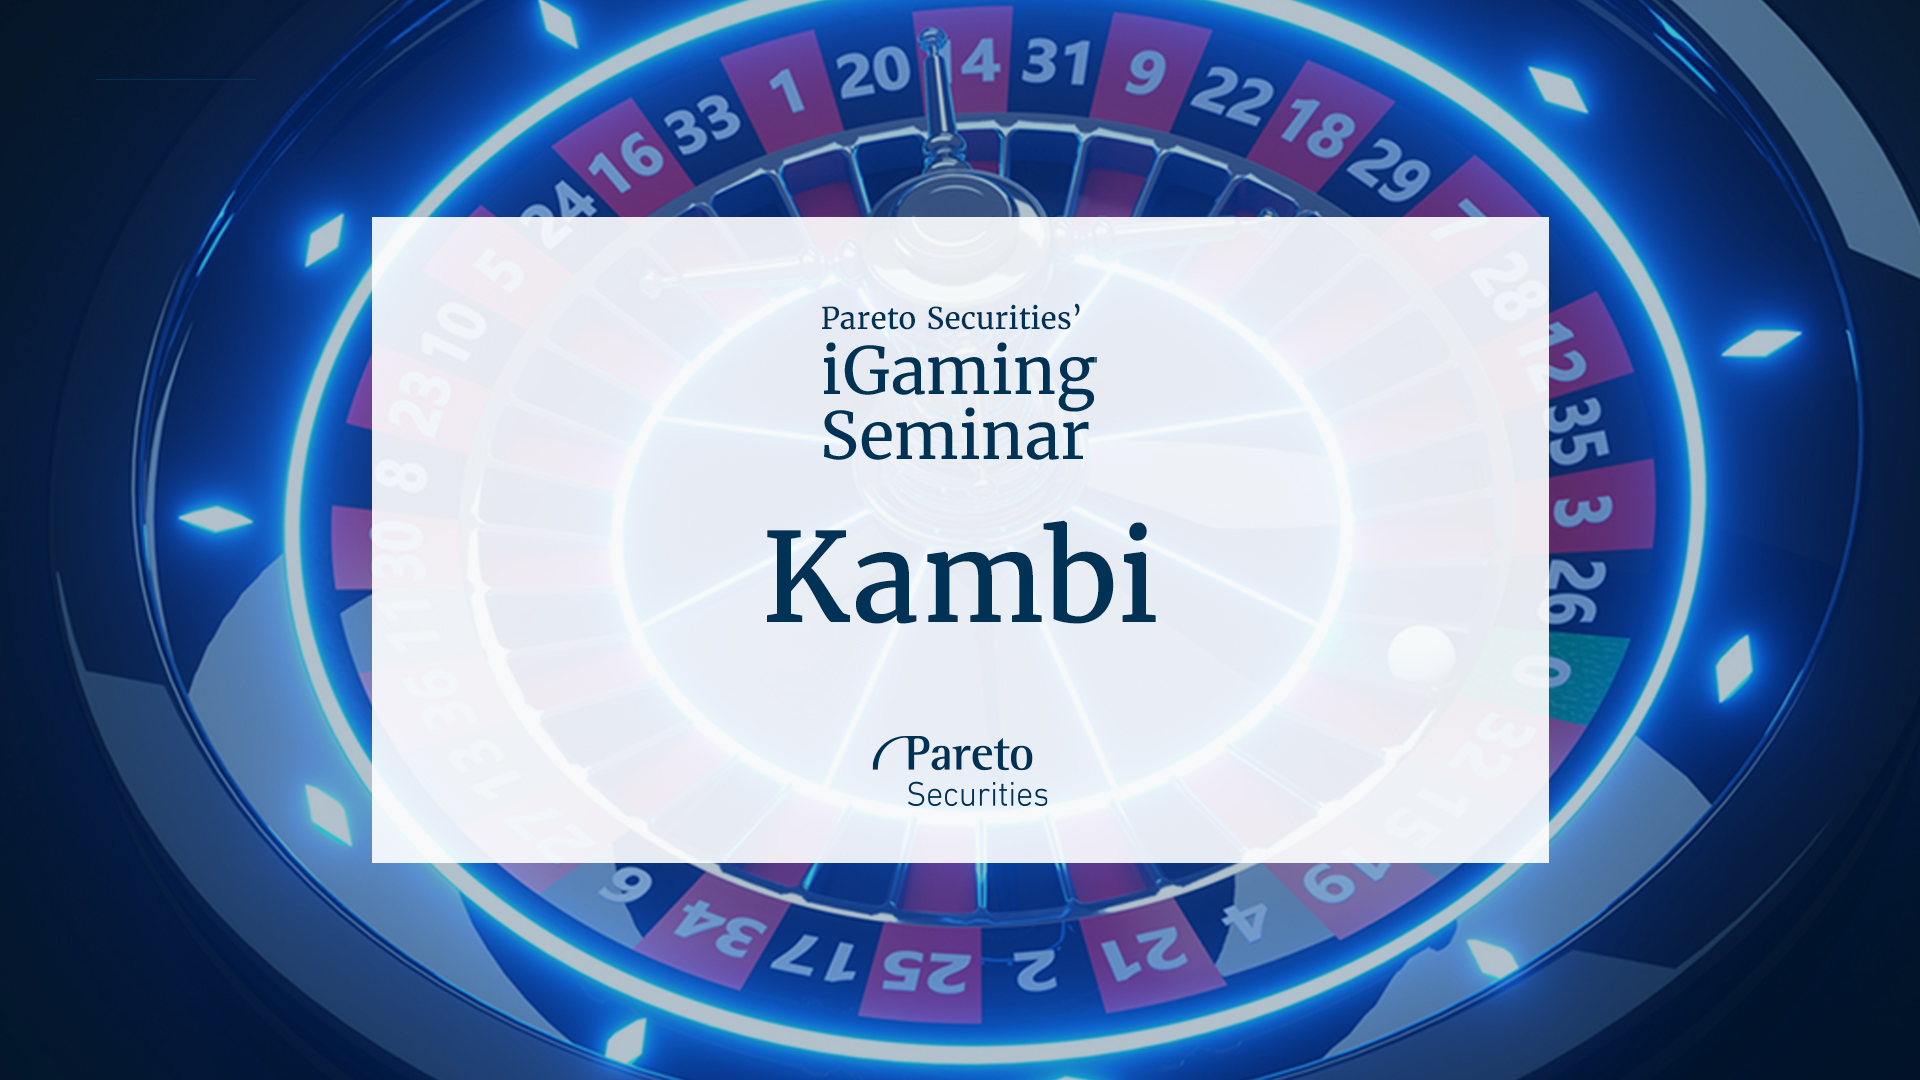 Kambi / Pareto Securities’ virtual iGaming seminar